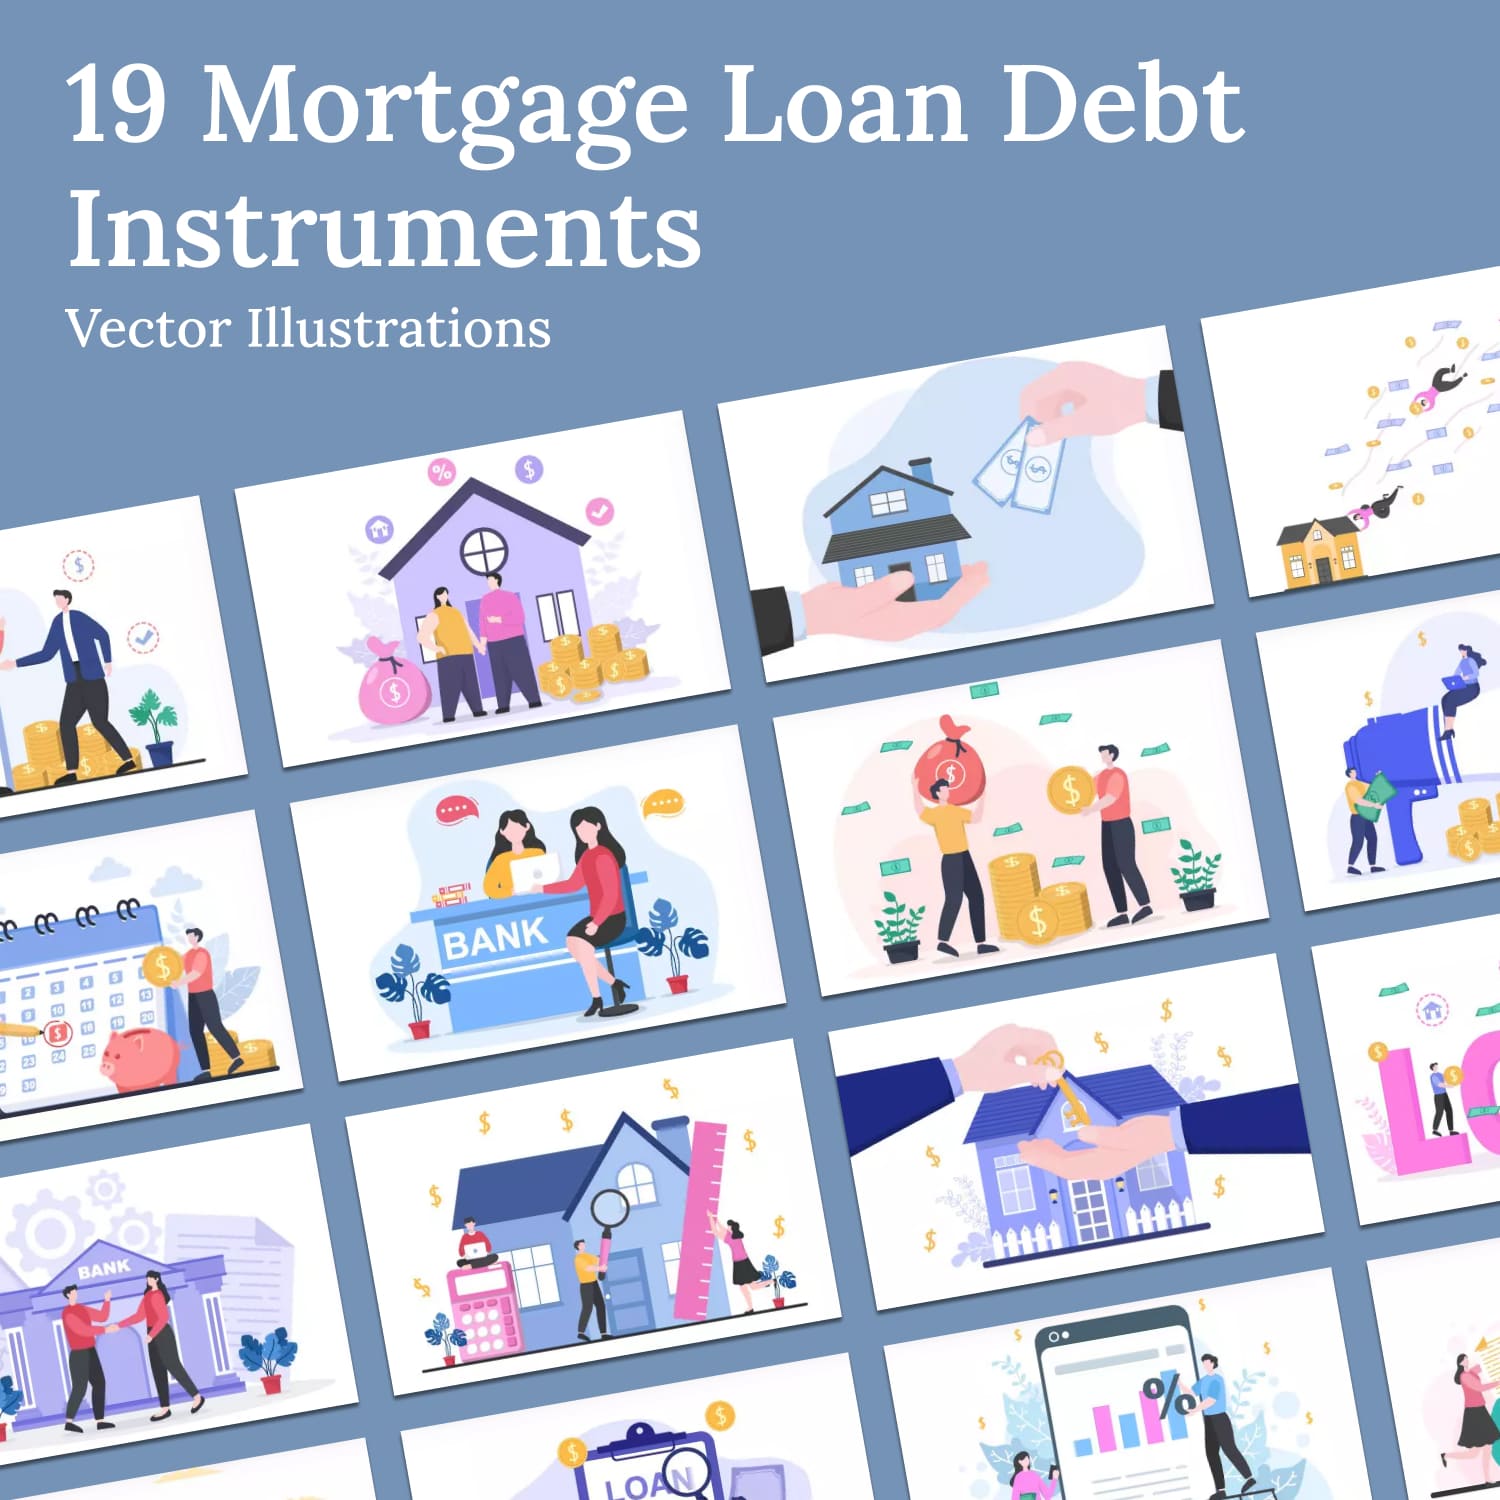 19 Mortgage Loan Debt Instruments Vector illustrations.